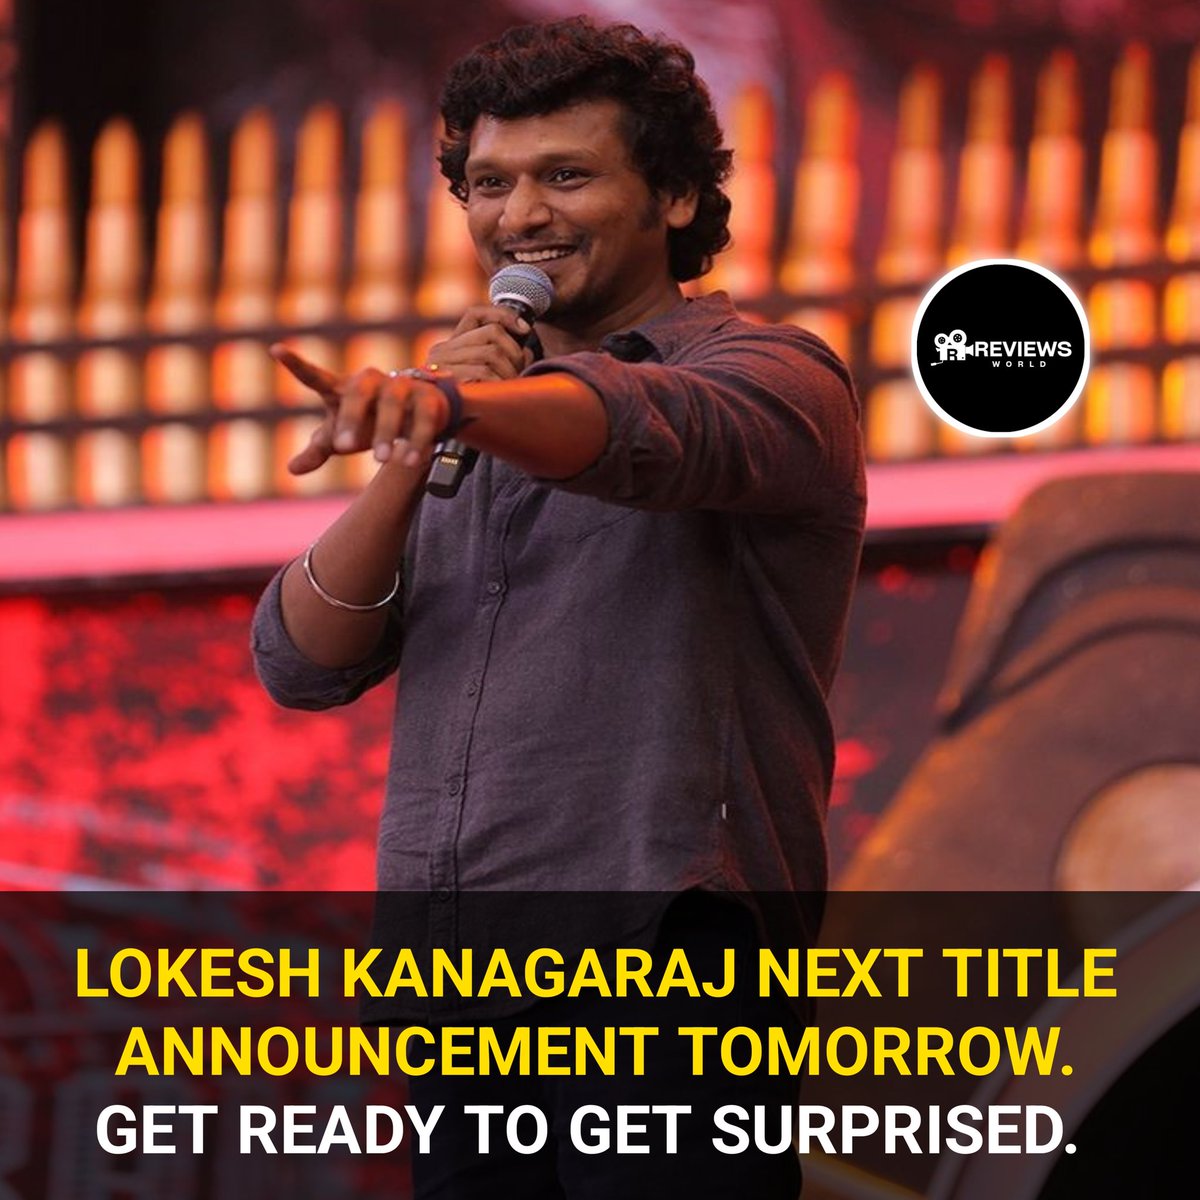 Lokesh Kanagaraj 🔥🥳 

#lokeshkanagaraj #lokeshkanagaraj_film #lokiuniverse #ThalapathyVijay𓃵 #leo #master #Vikram #anirudh #action #Tamil #title #announcement #offical #firstlook #Cinema #Bollywood #TrendingNow #reviewsworld